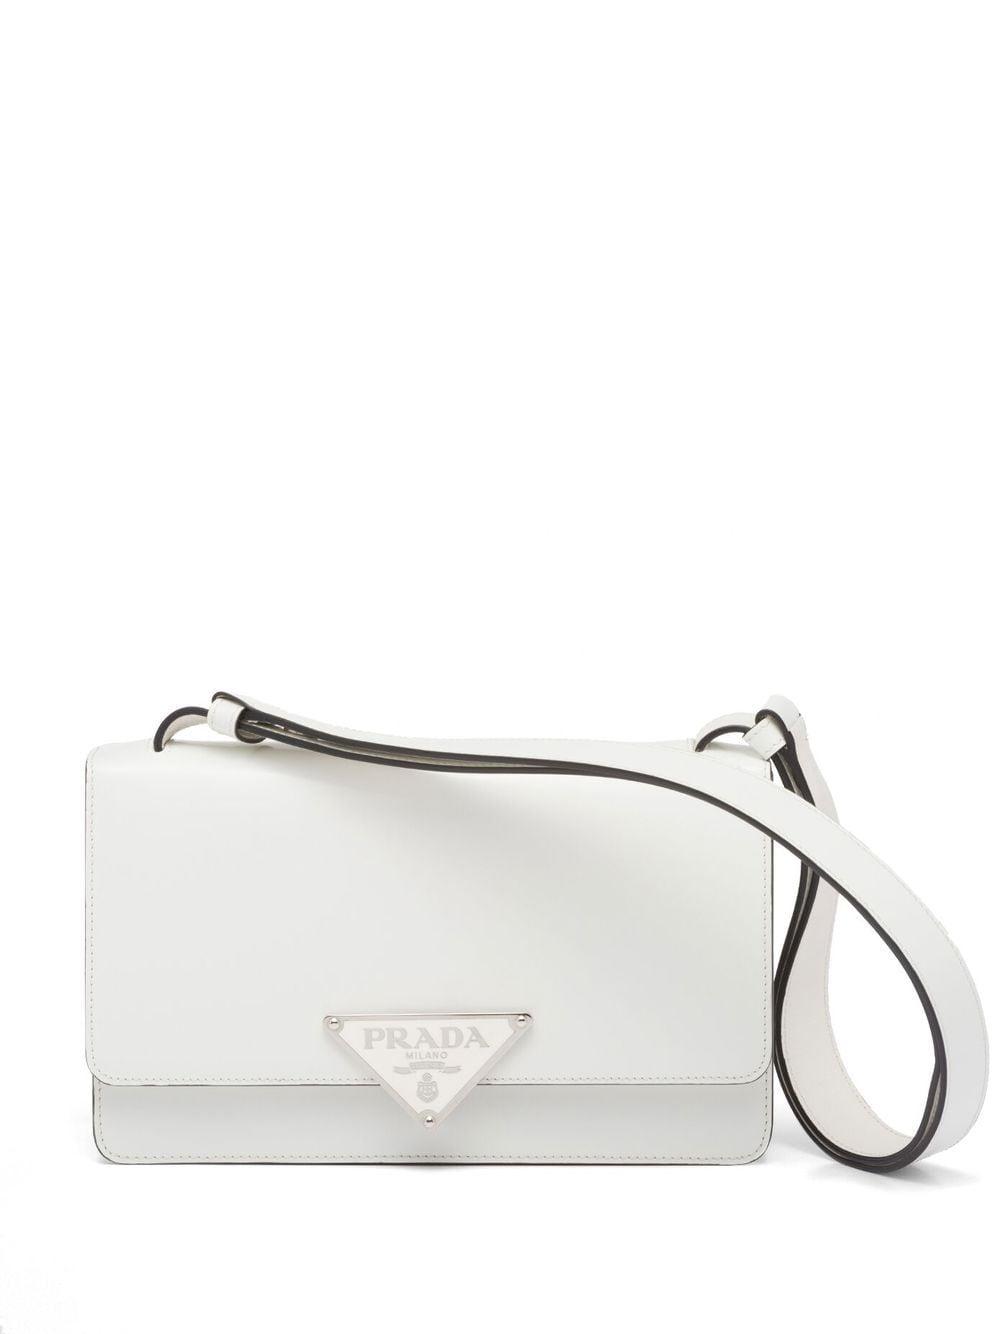 Prada Emblème Brushed-leather Bag in White | Lyst